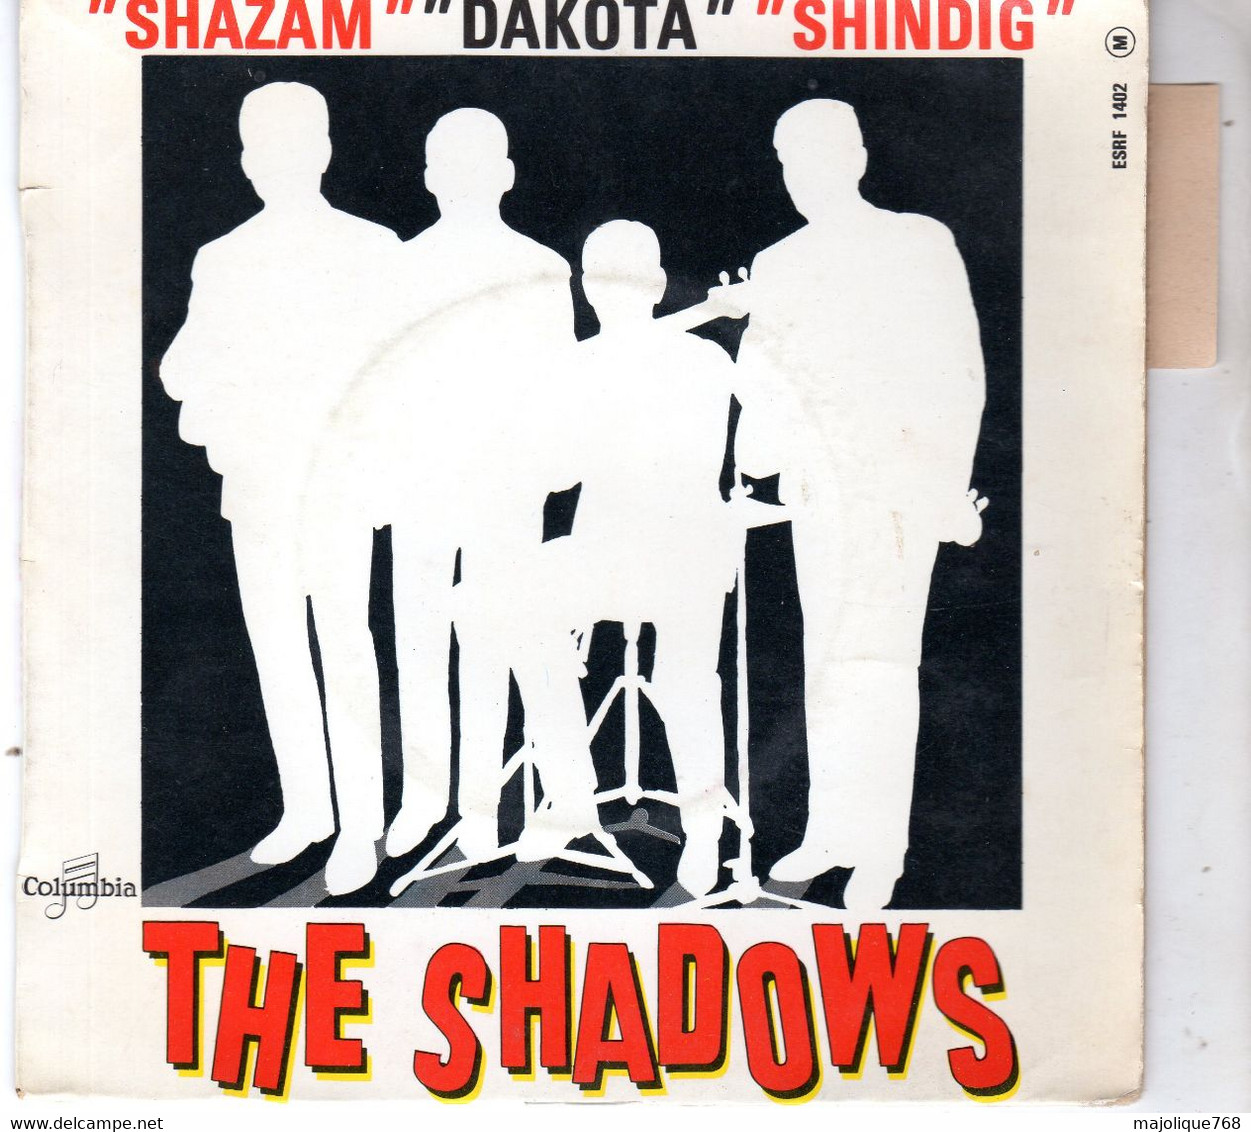 Disque The Shadows - Shazam - Dakota - Columbia ESRF 1402 France 1964 - Instrumentaal